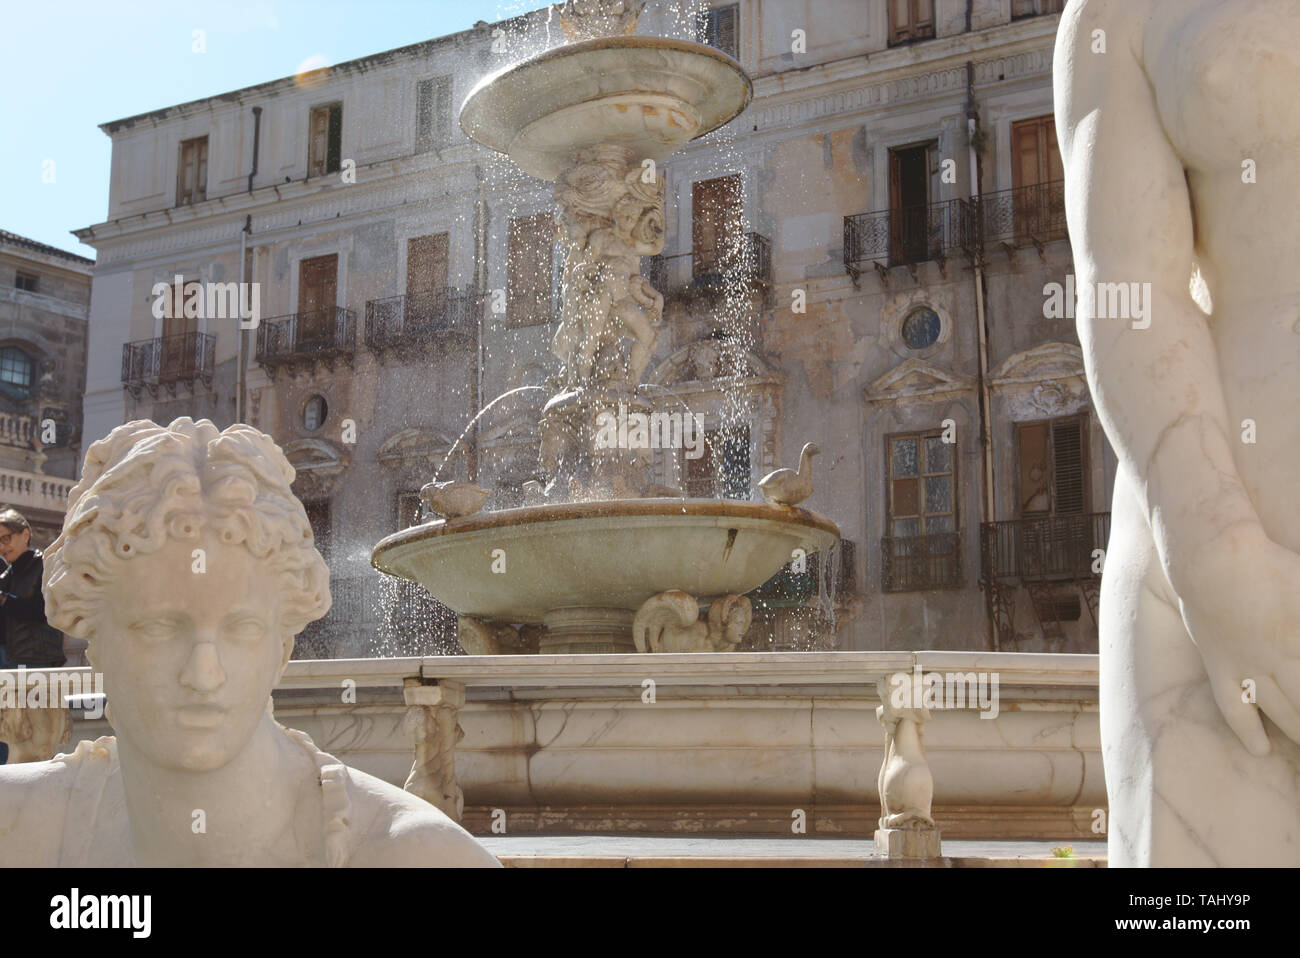 Pretoria fountain, Palermo, Italy Stock Photo